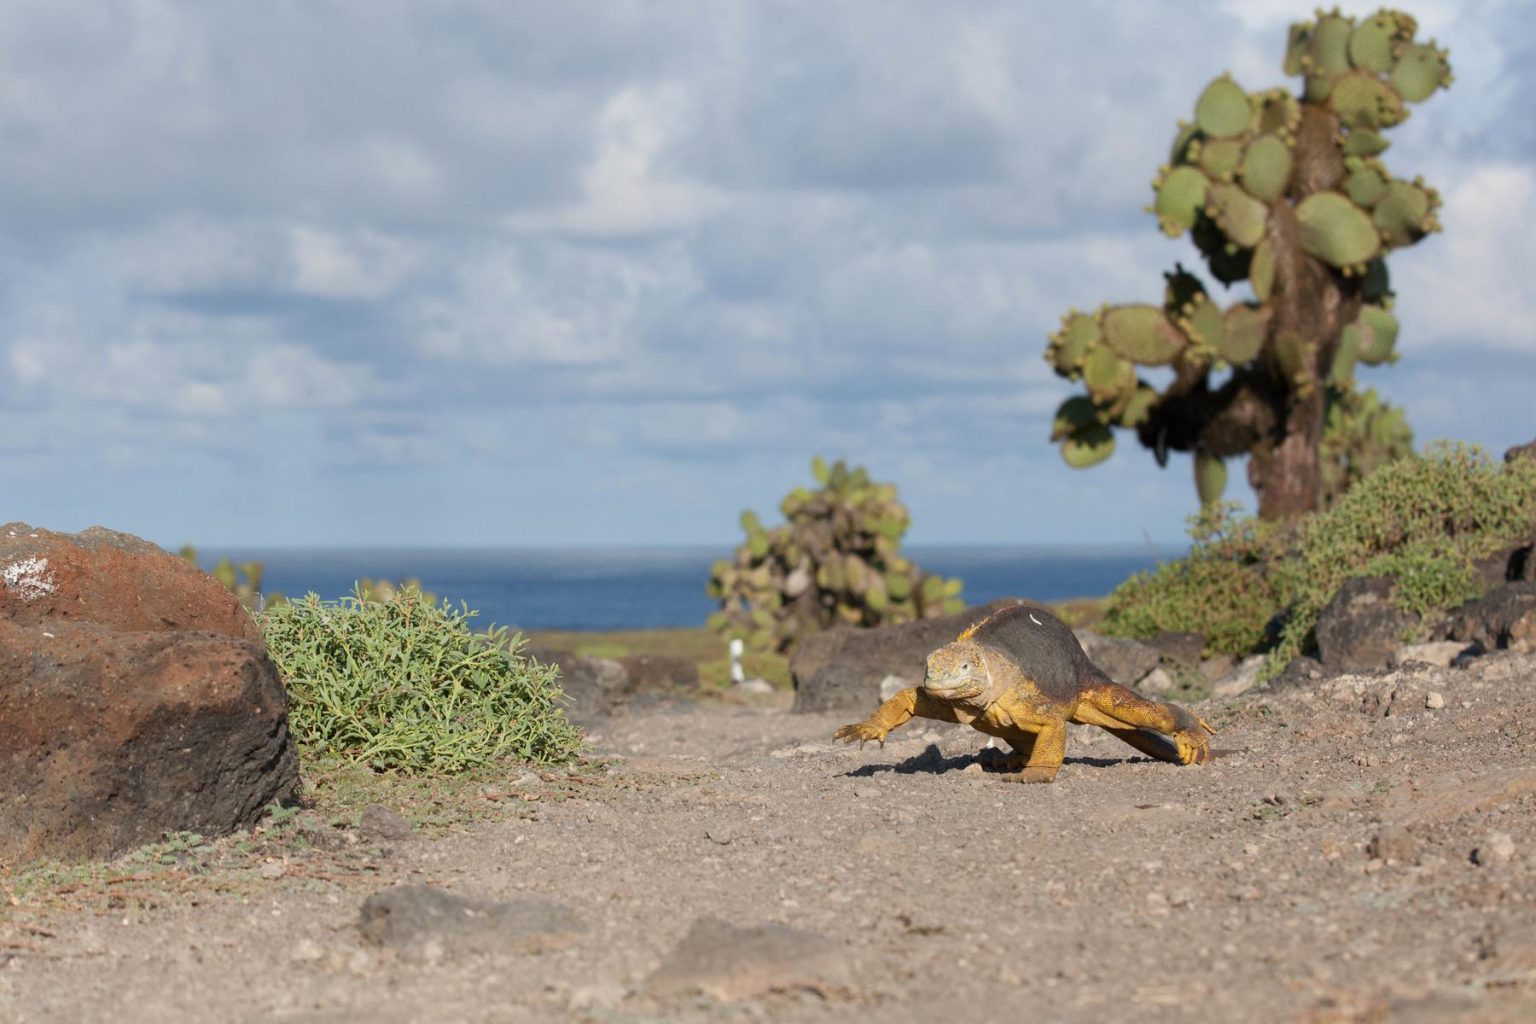 Galapagos Islands marine iguana